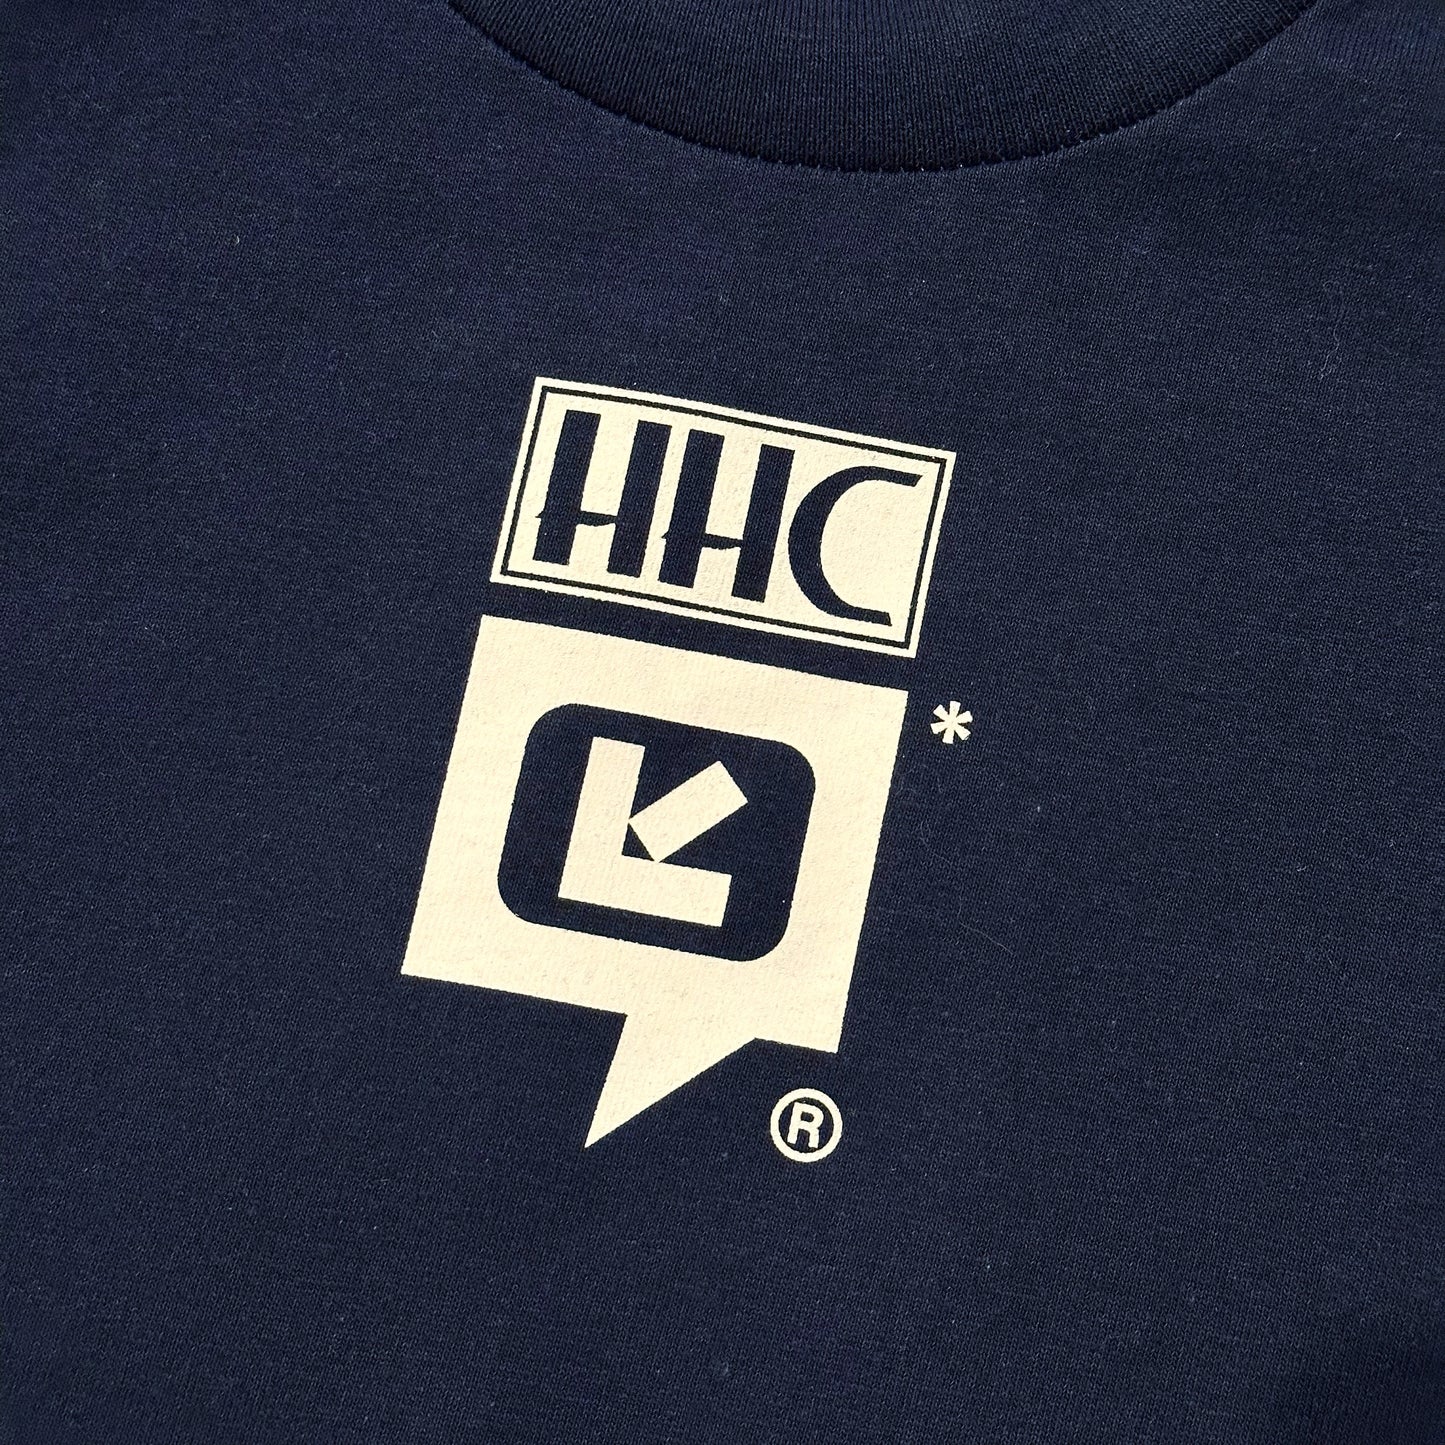 VHS ロンT「HHC 髭髭倶楽部」 x 「LIPIT-ISCHTAR」コラボTシャツ higehigeclub リピト・イシュタールhhc ポロクラブ ネイビー